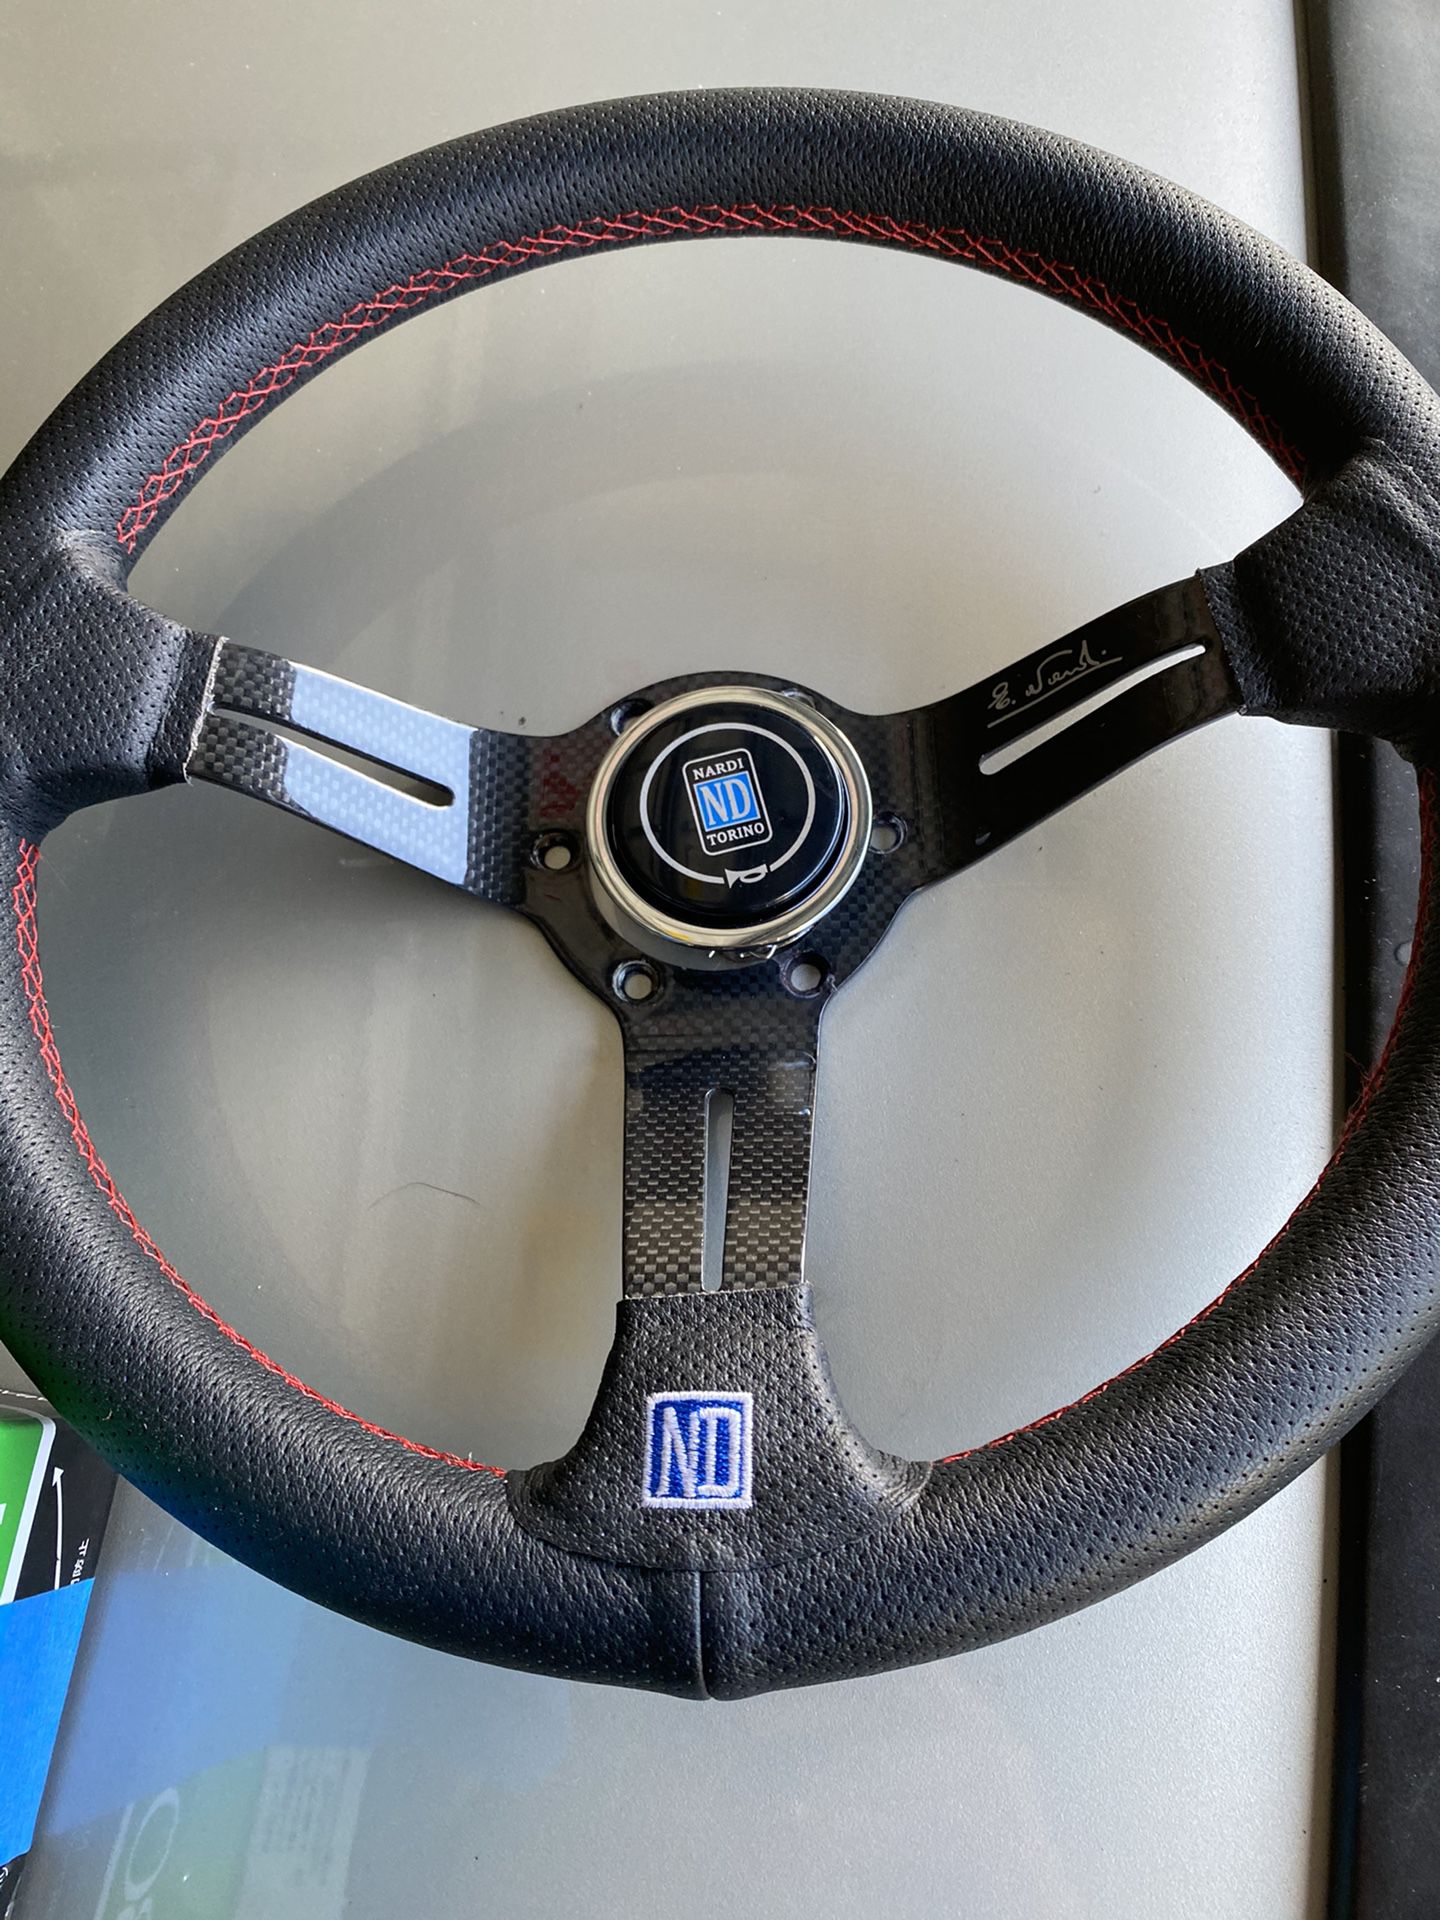 E30/36 steering wheel